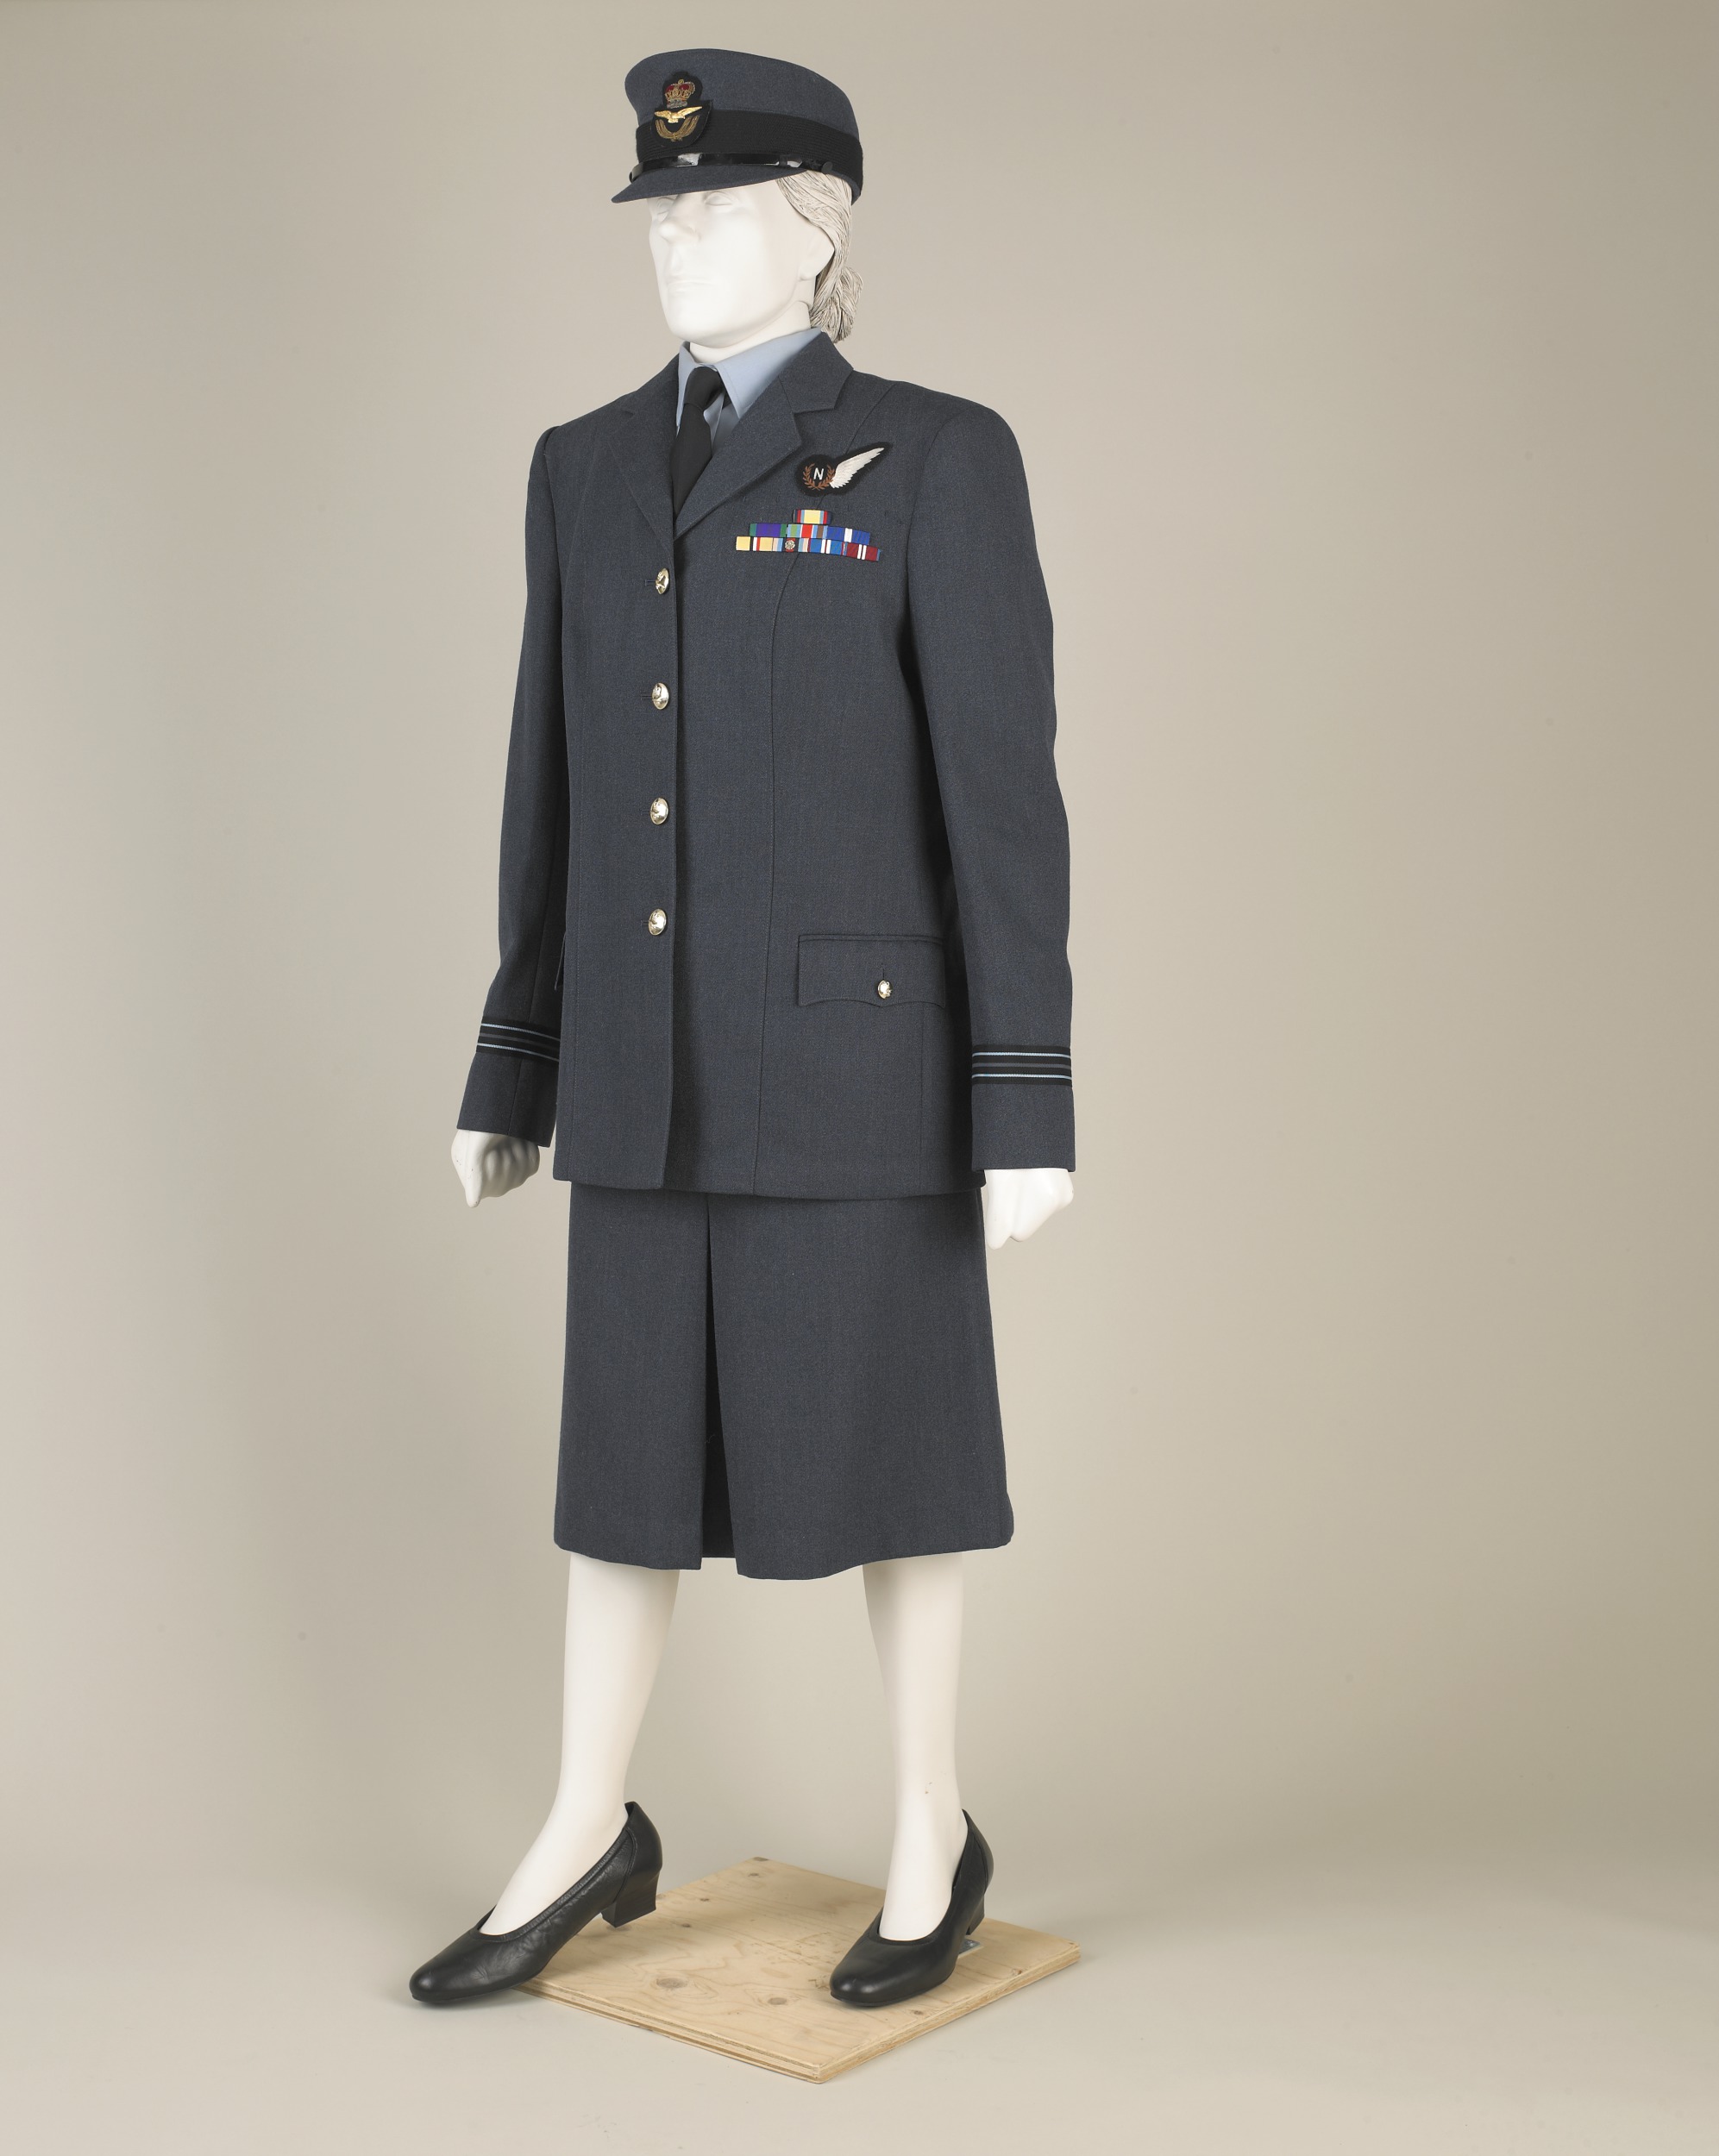 Caroline Paige's RAF uniform